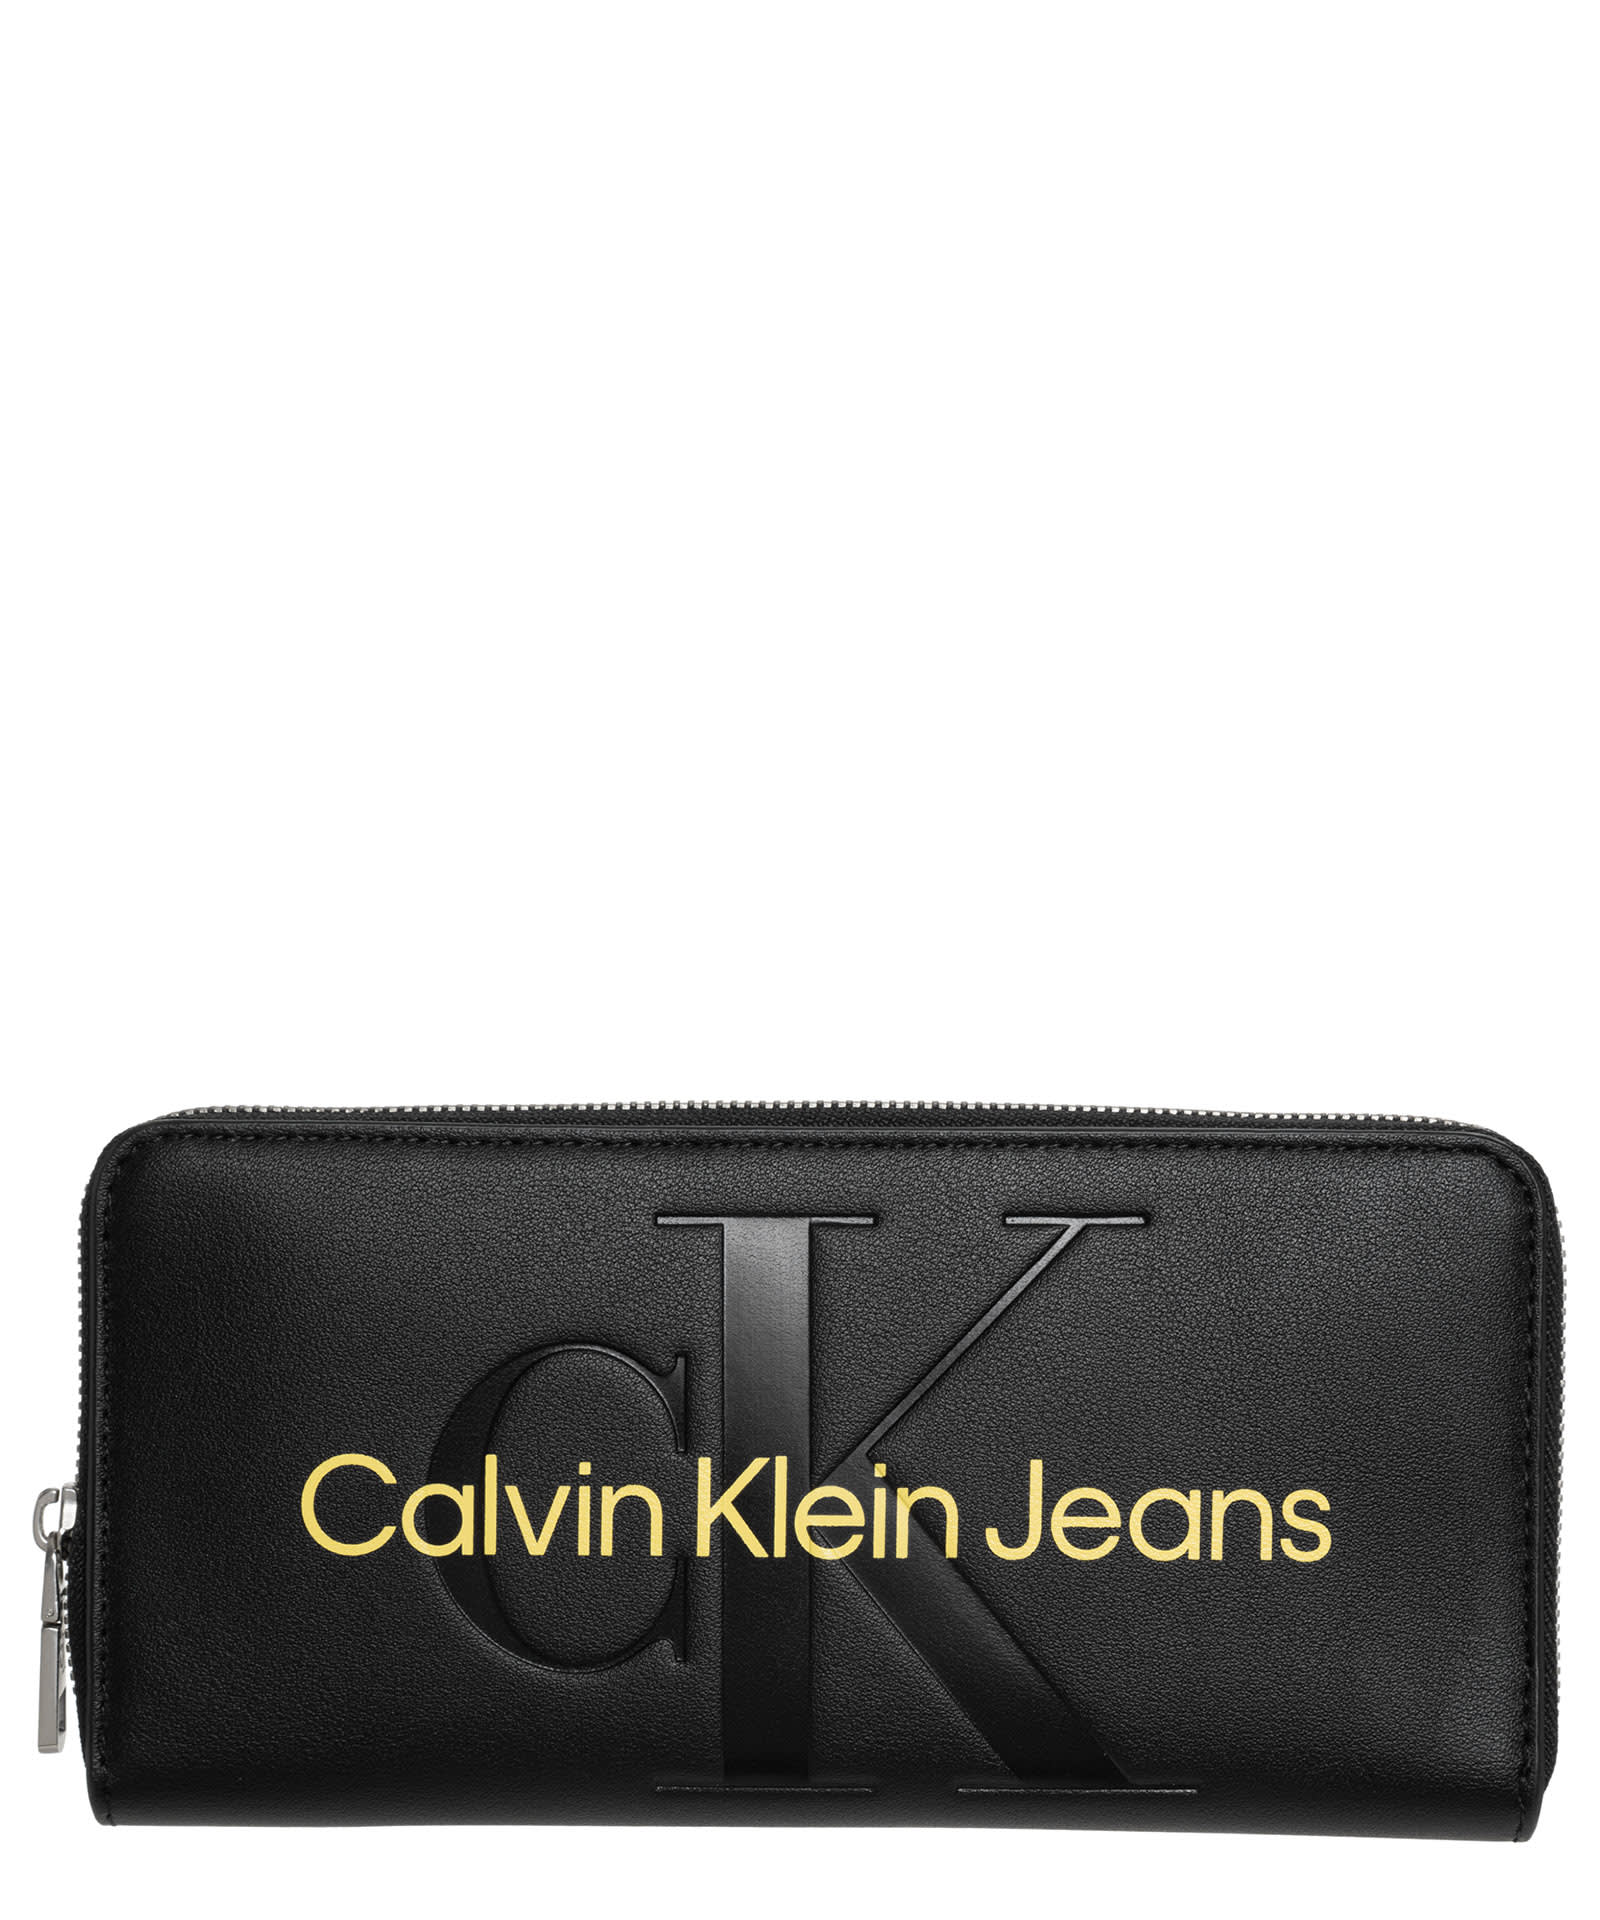 Calvin Klein Jeans Est.1978 Wallet In Black